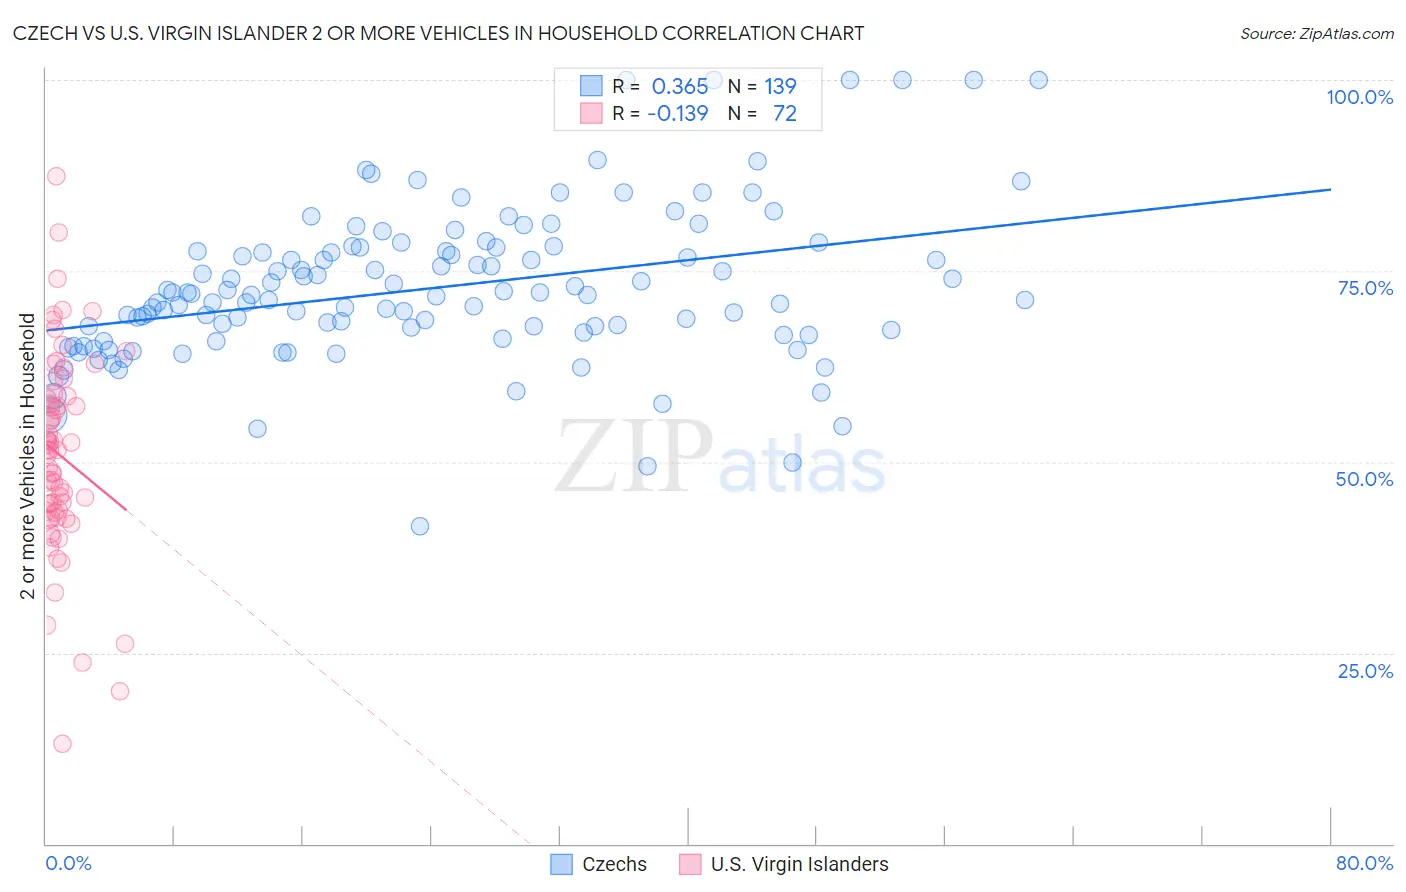 Czech vs U.S. Virgin Islander 2 or more Vehicles in Household